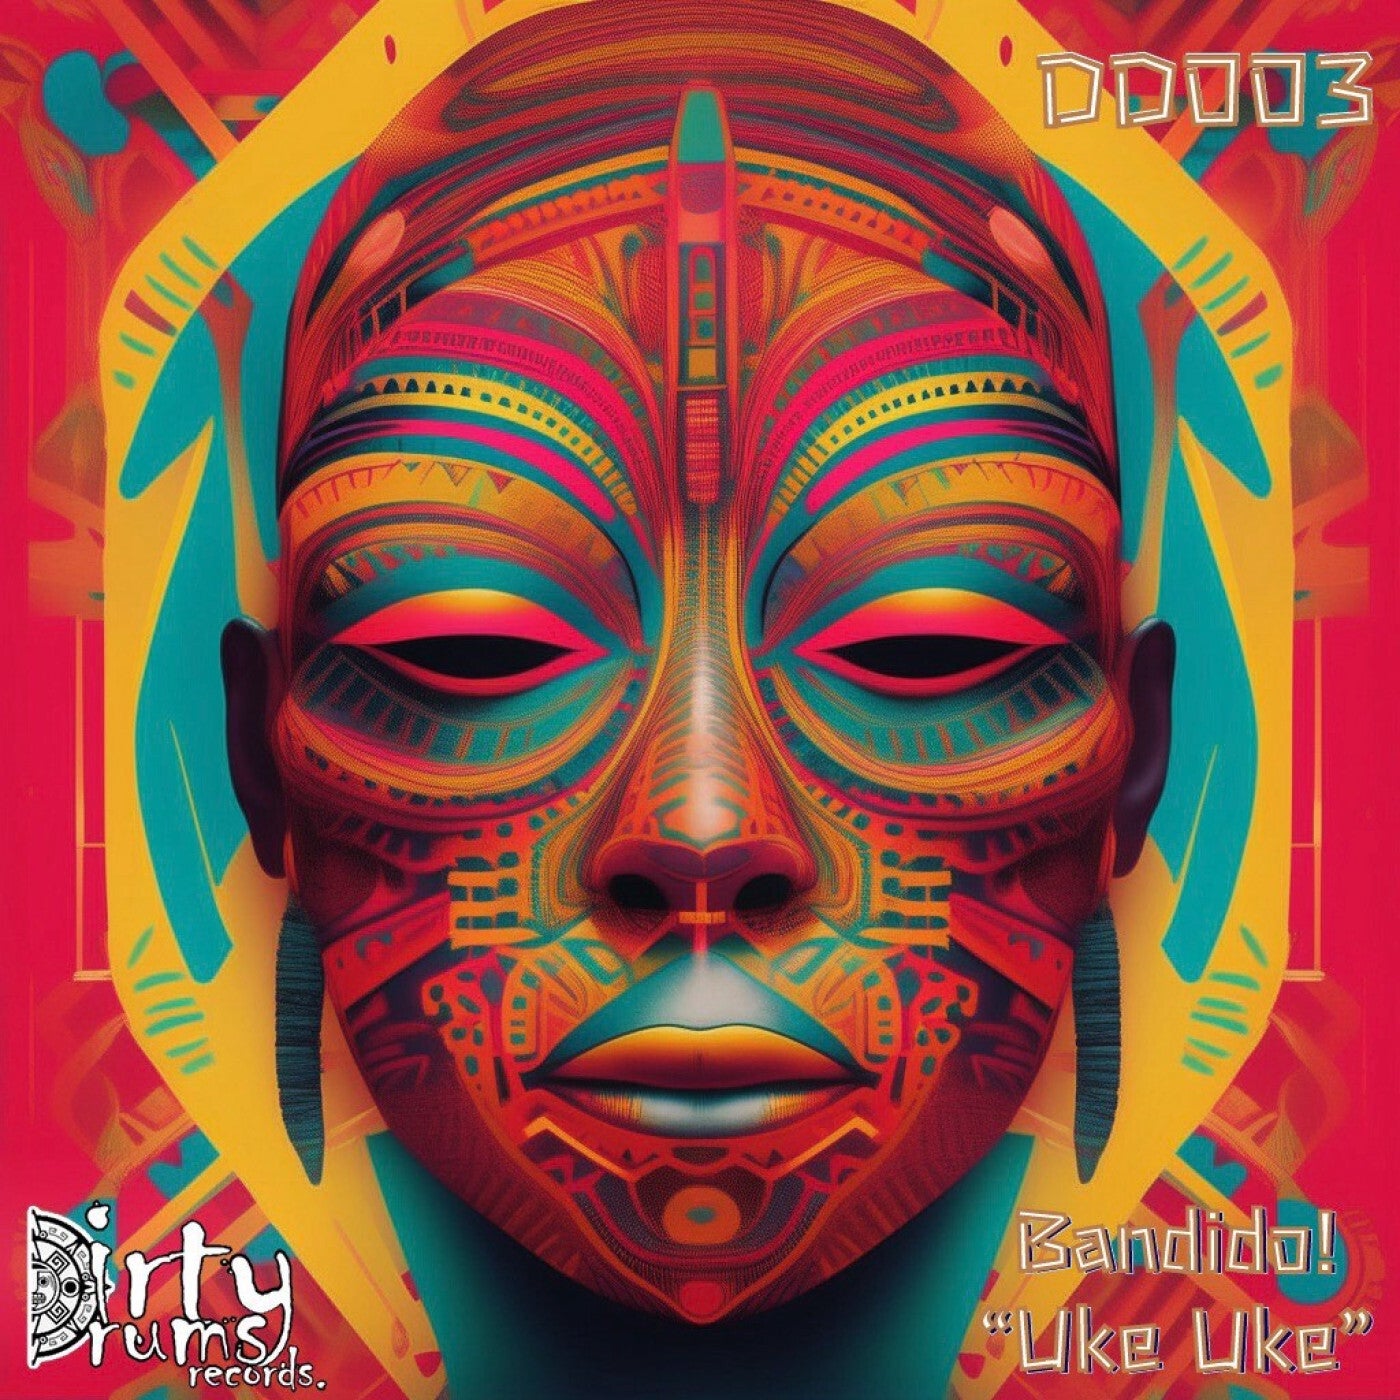 image cover: Bandido! - Uke Uke on Dirty Drums Records